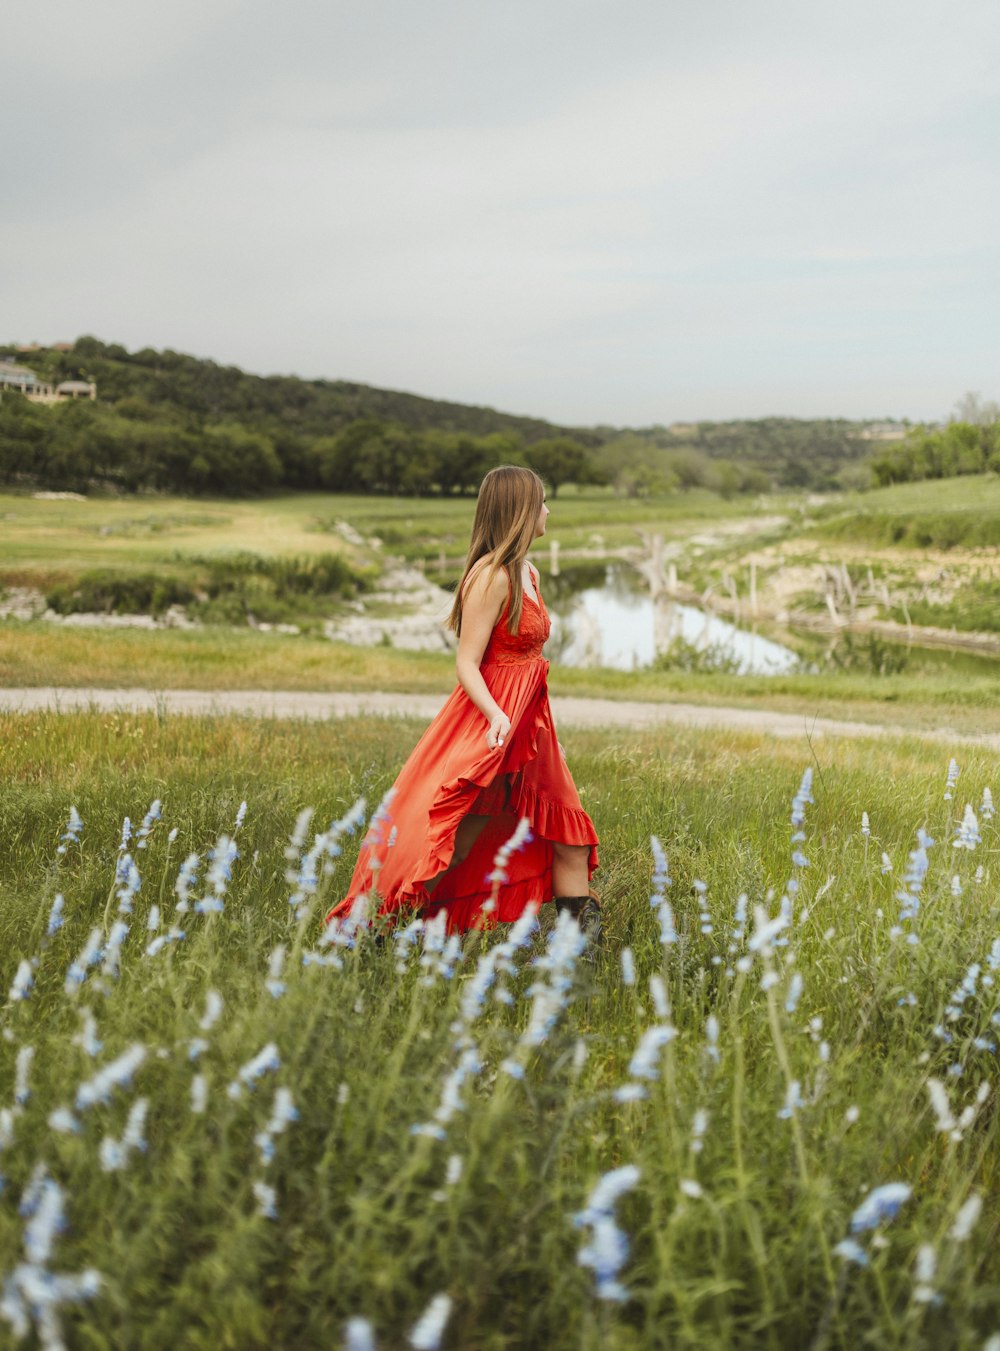 a woman in a red dress walking through a field